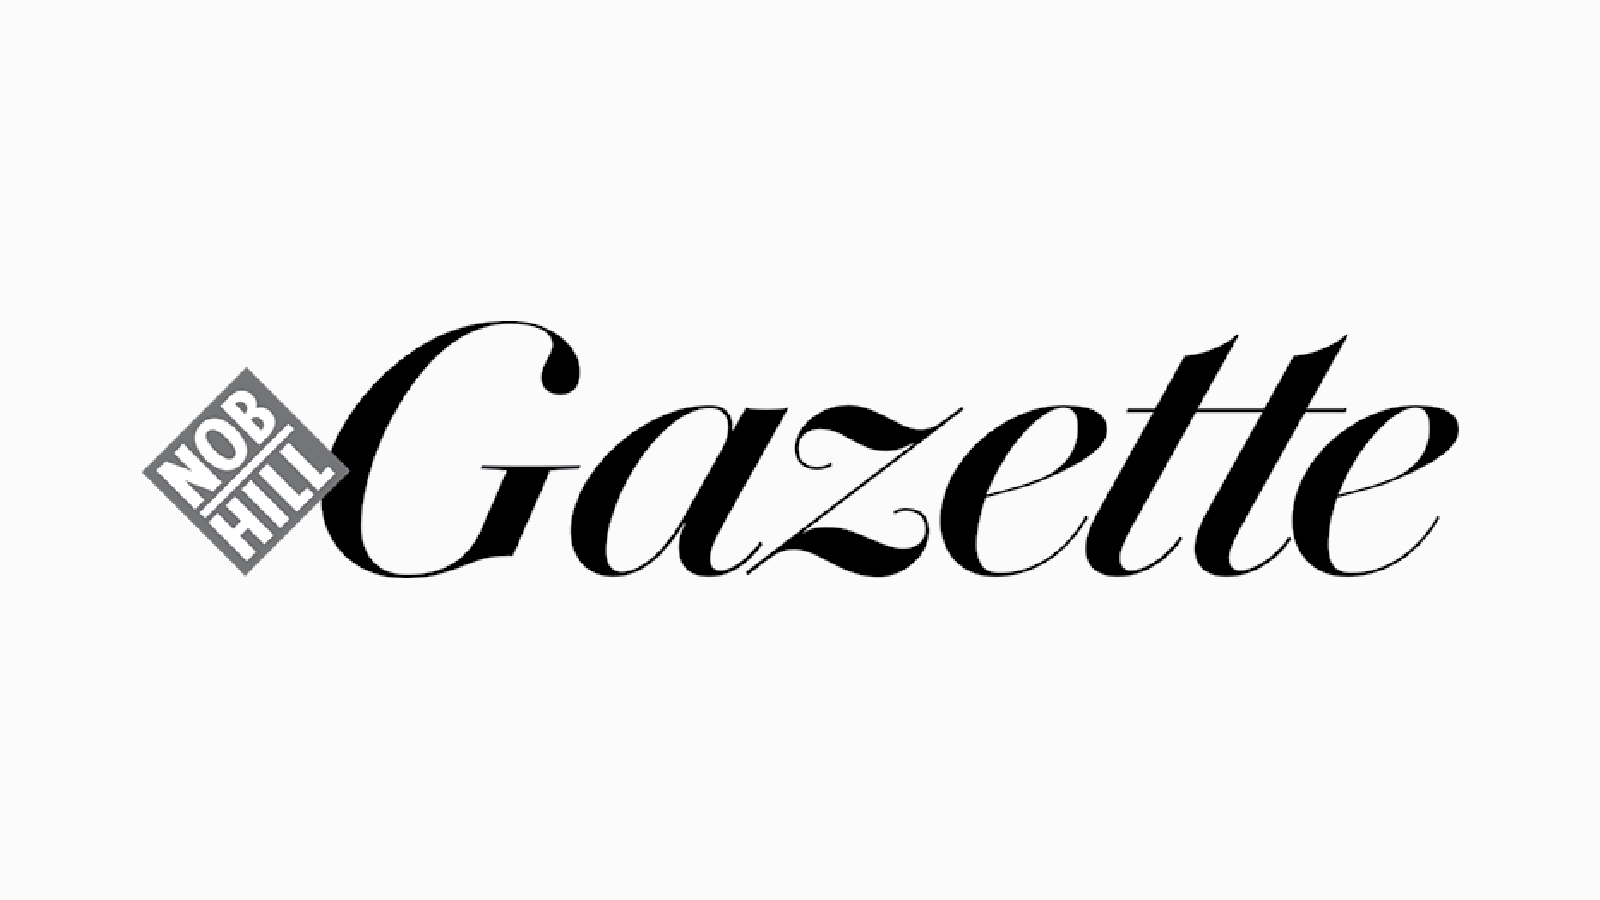 Nob Hill Gazette logo - white background.png